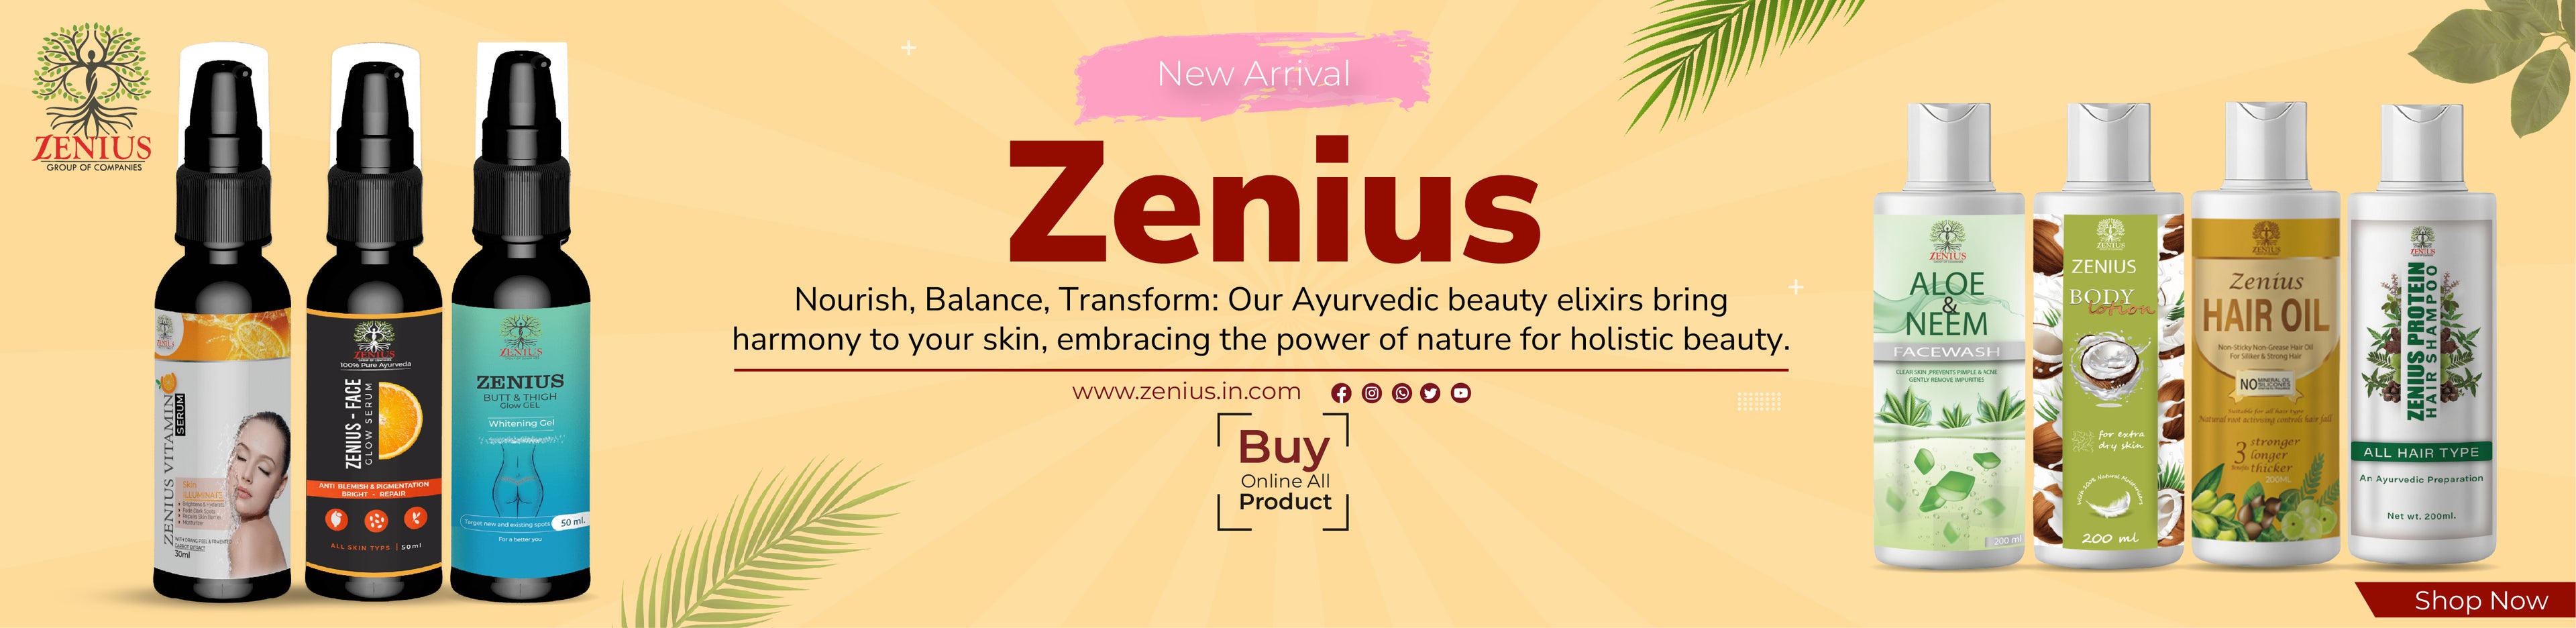 ayurvedic beauty product of zenius